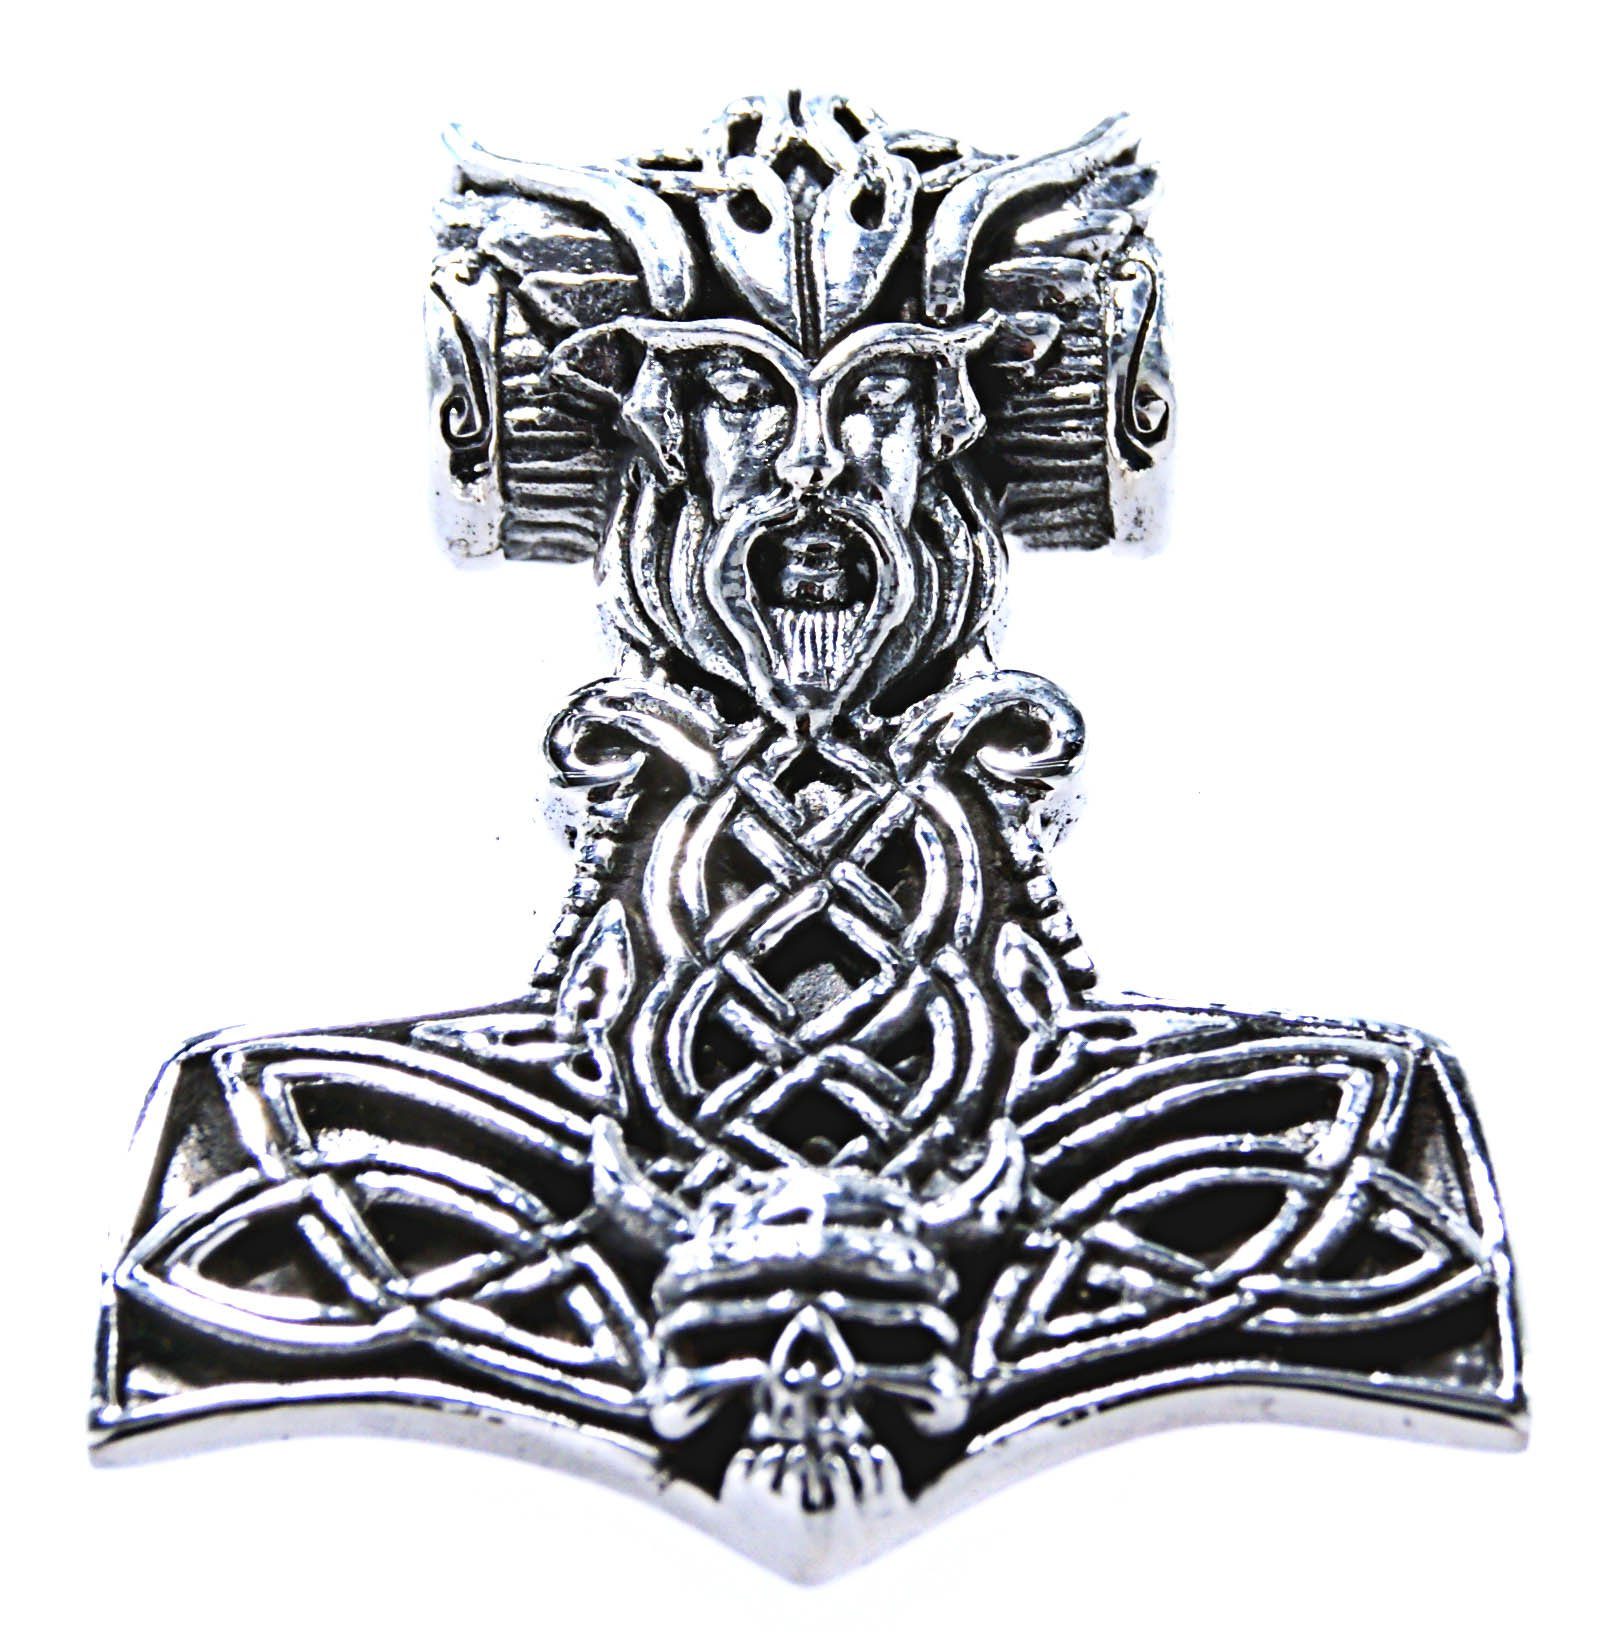 Leather Hammer of Schädel 245 Thorshammer Odin Wikinger Silber Thors Kettenanhänger 925 Kiss Nr Helm Anhänger